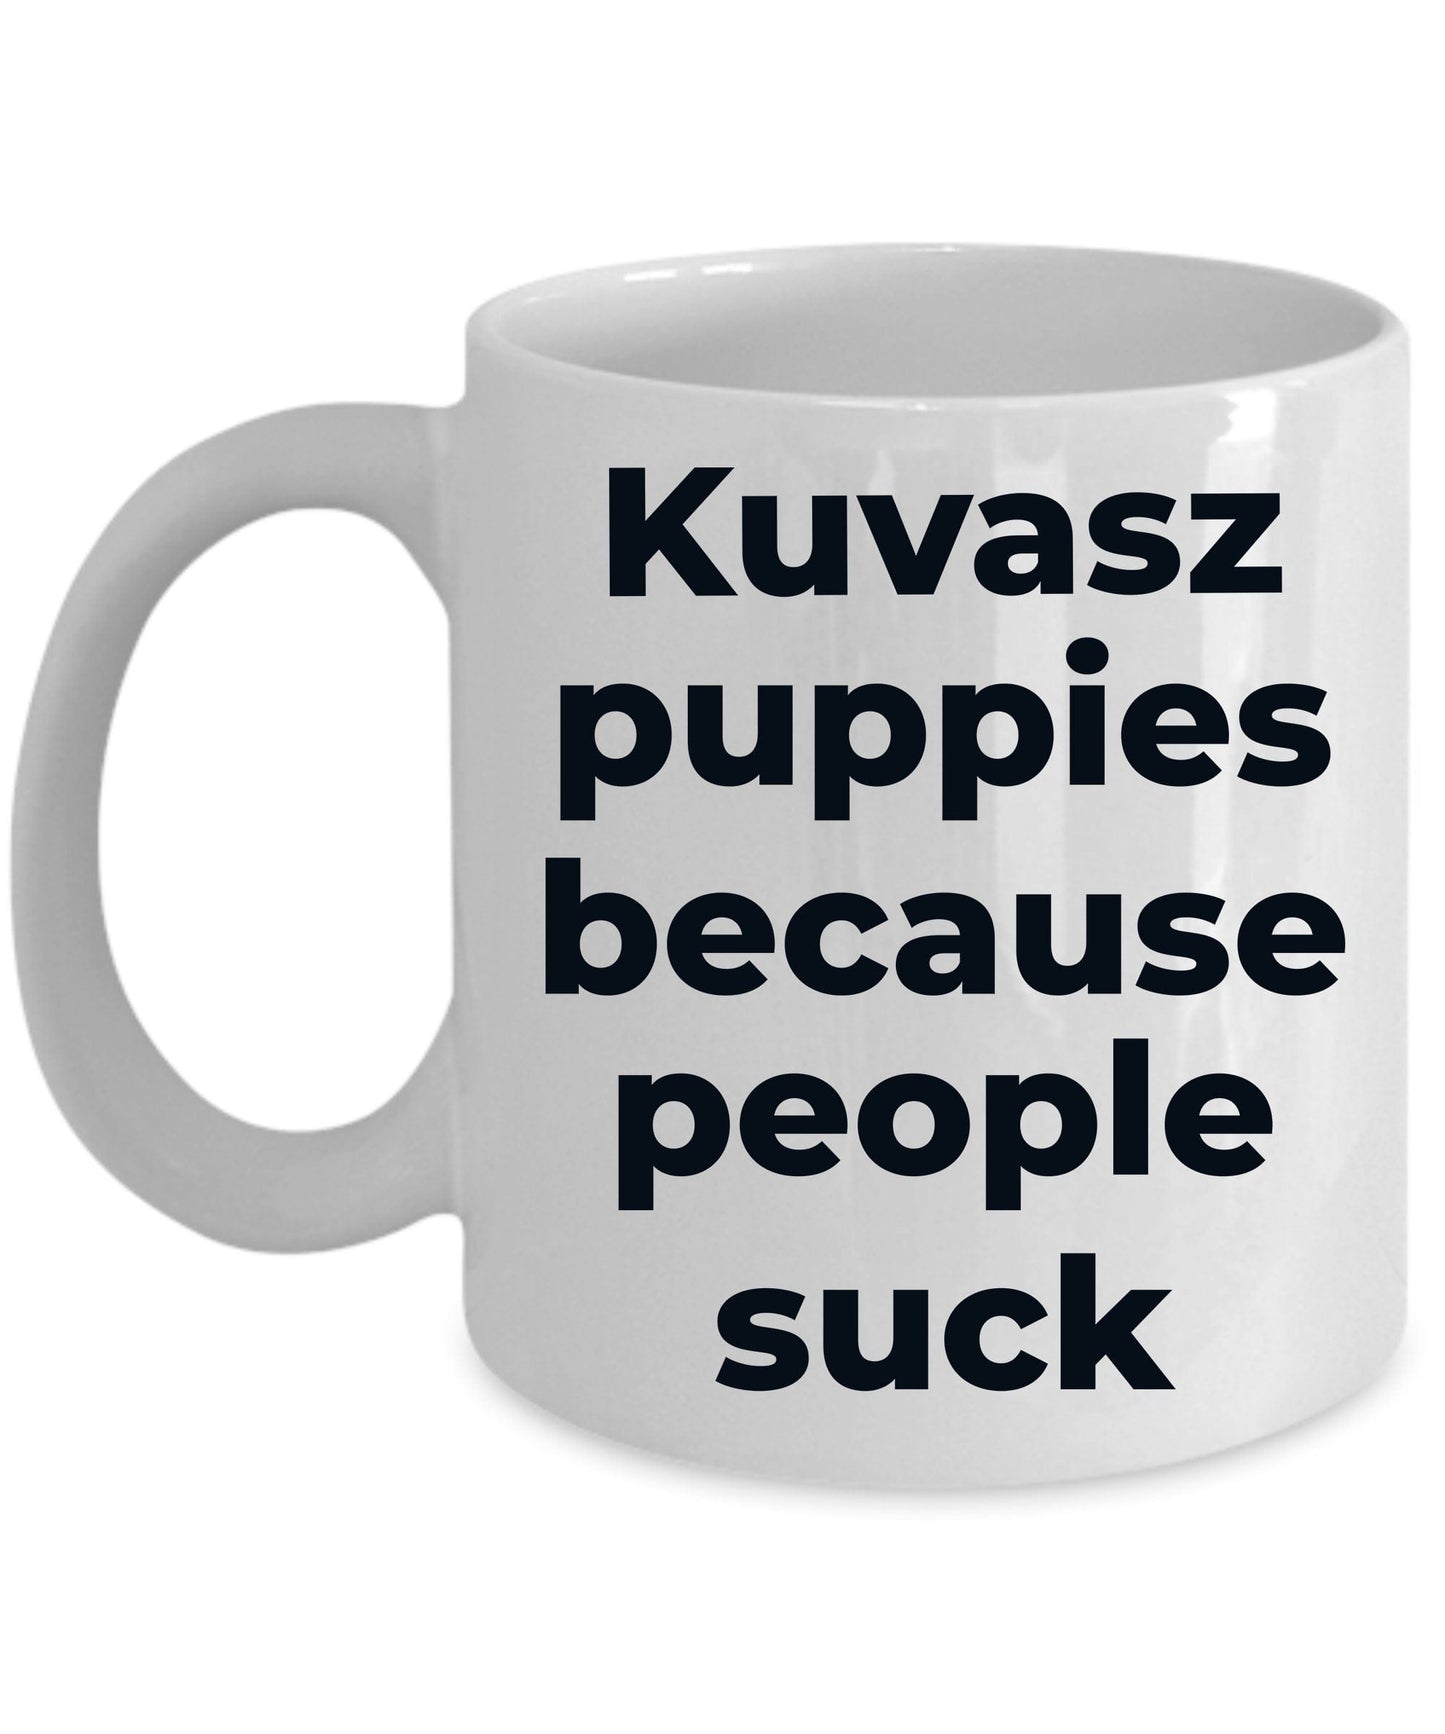 Kuvasz funny dog mug - Kuvasz puppies because people suck white and color two tone